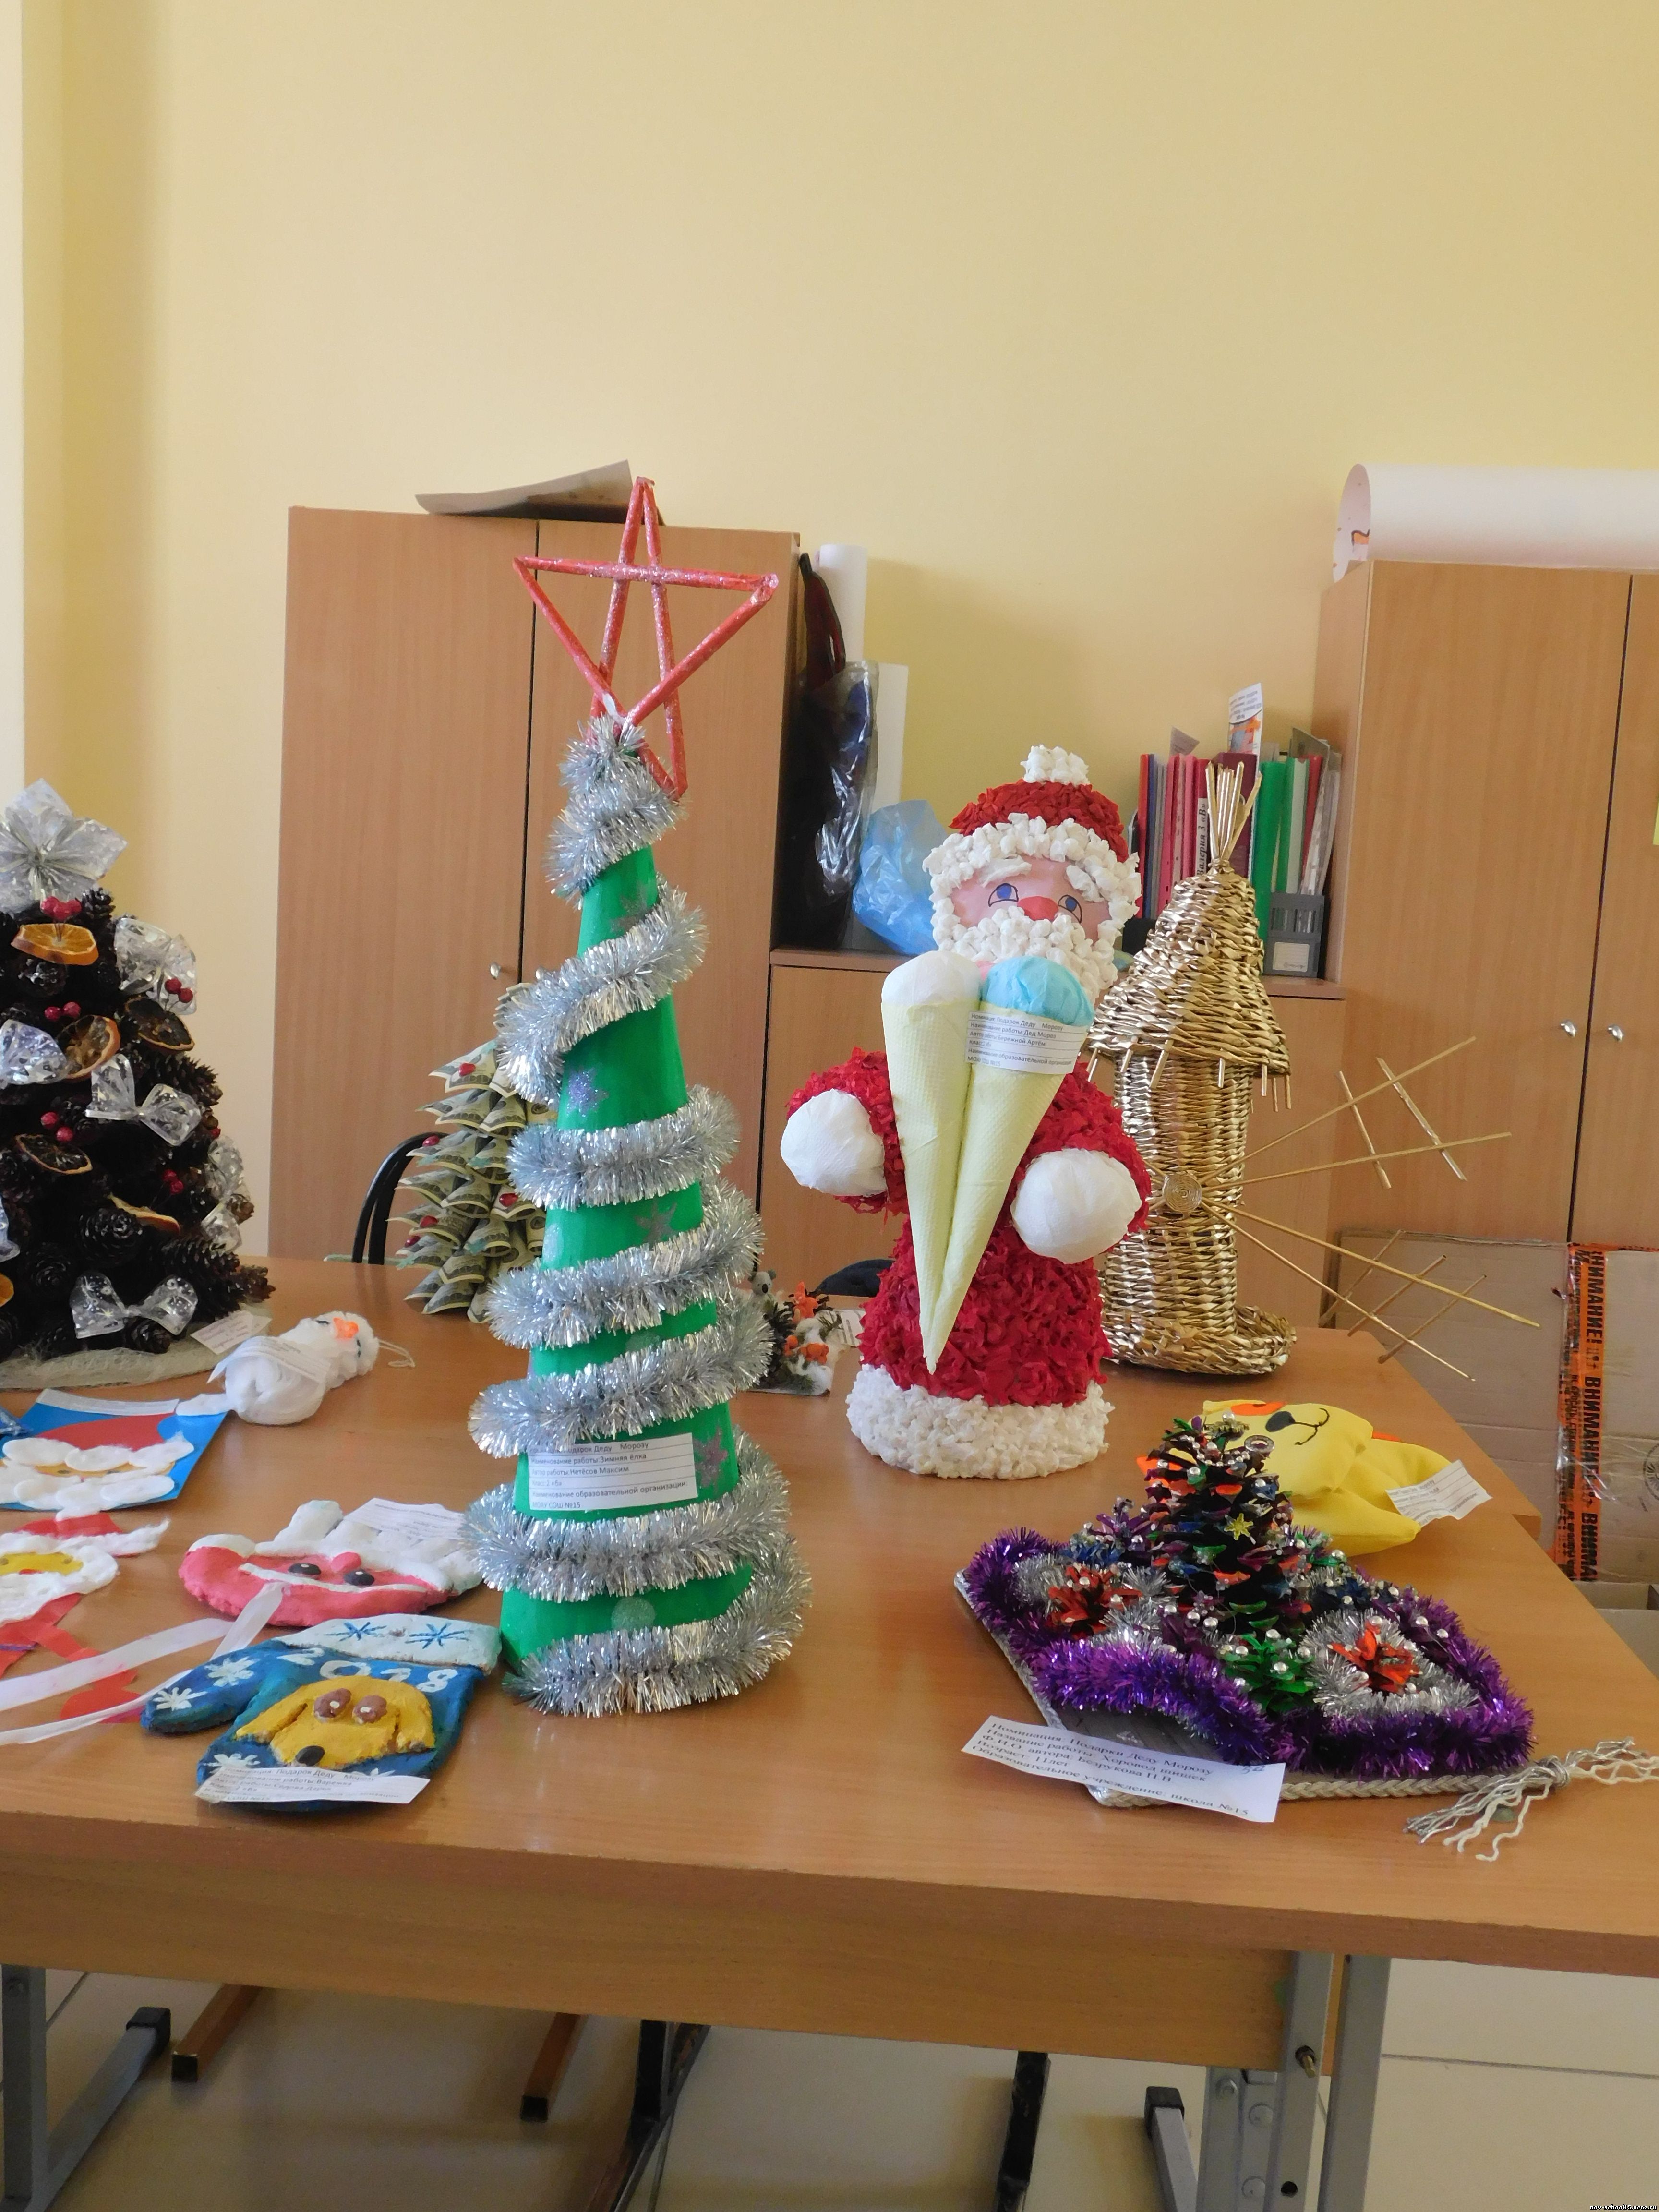 В Ширинском районе Снегурочка и Дед Мороз раздавали подарки водителям